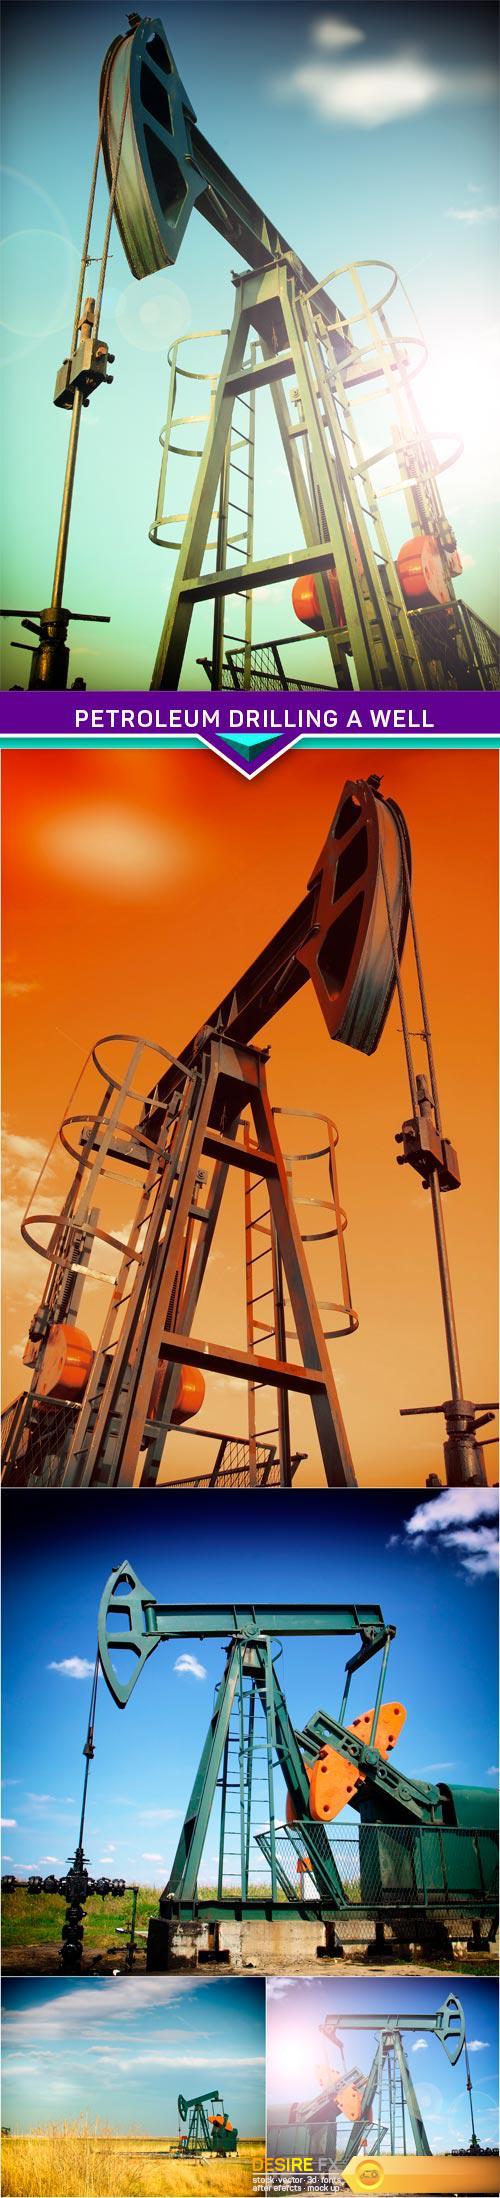 Petroleum drilling a well 5X JPEG